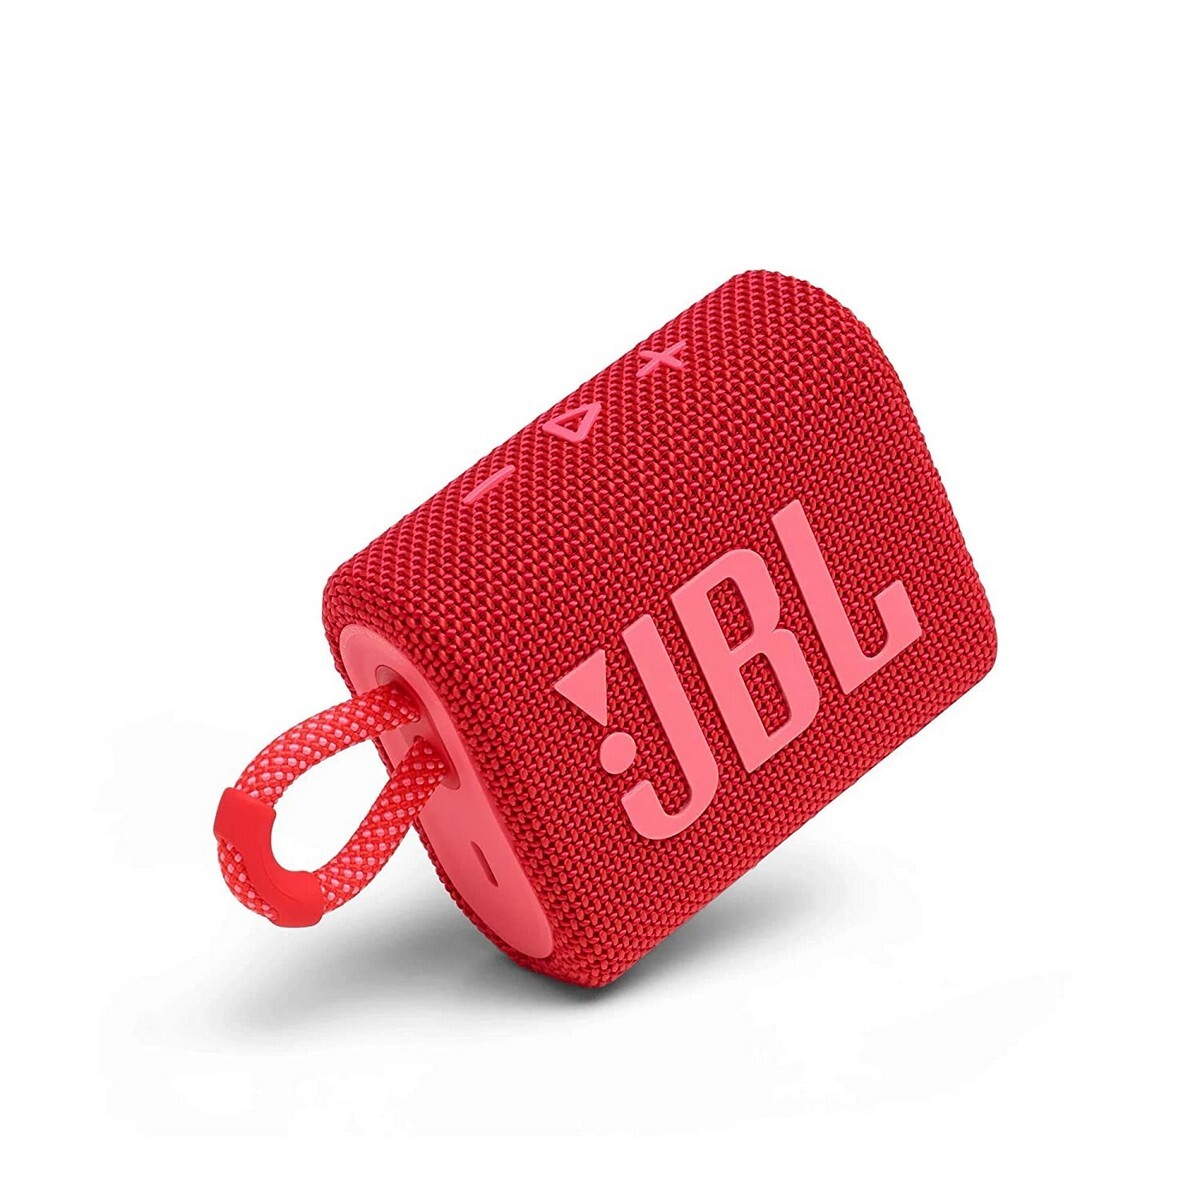 JBL Bluetooth Speaker Go3 Red